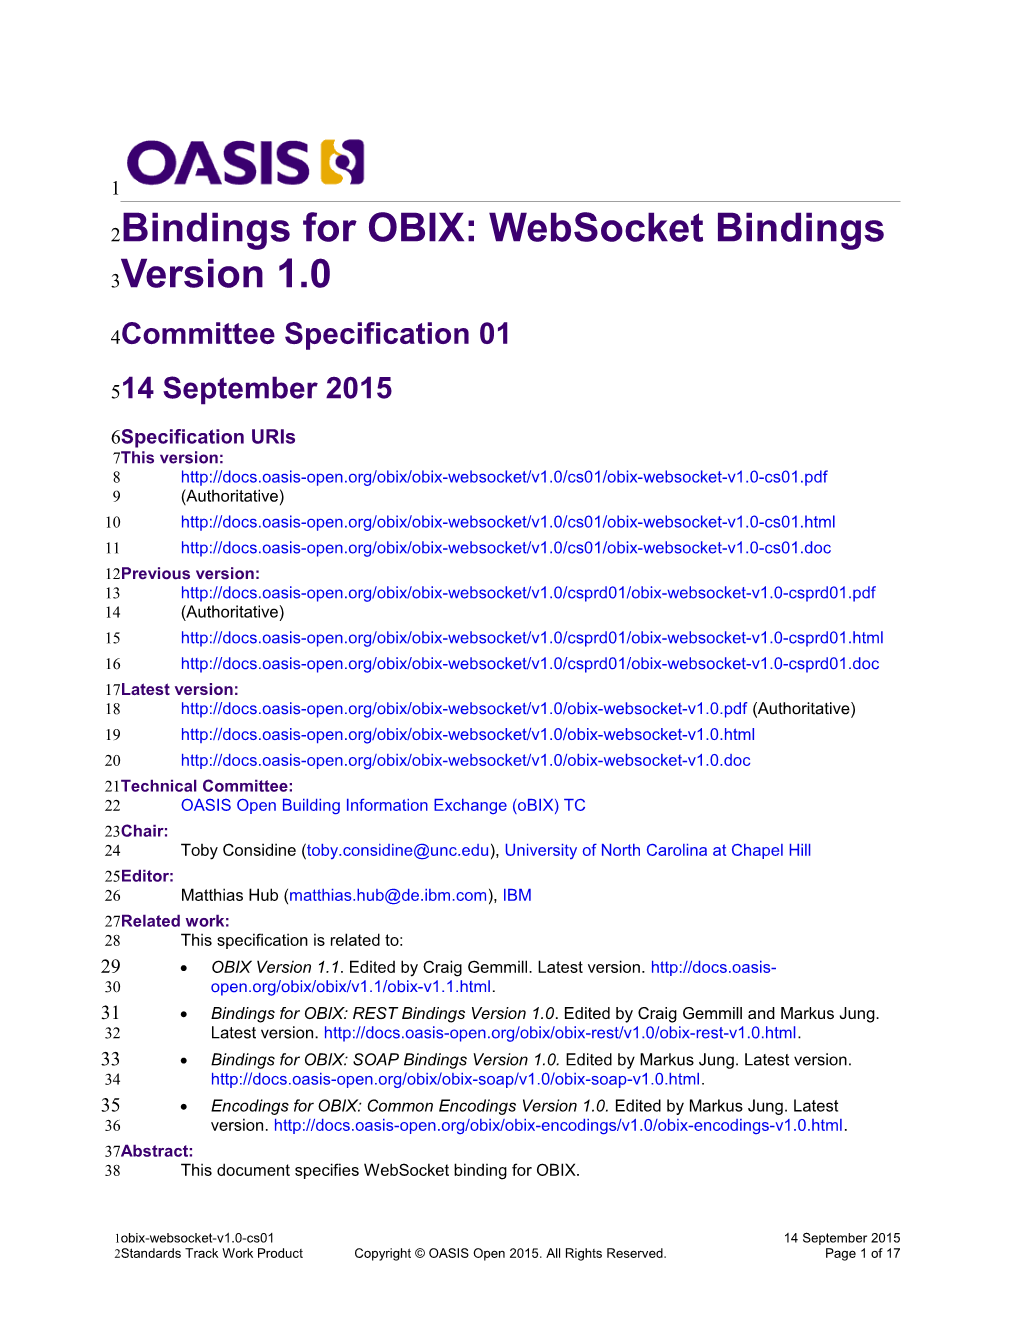 Bindings for OBIX: Websocket Bindings Version 1.0